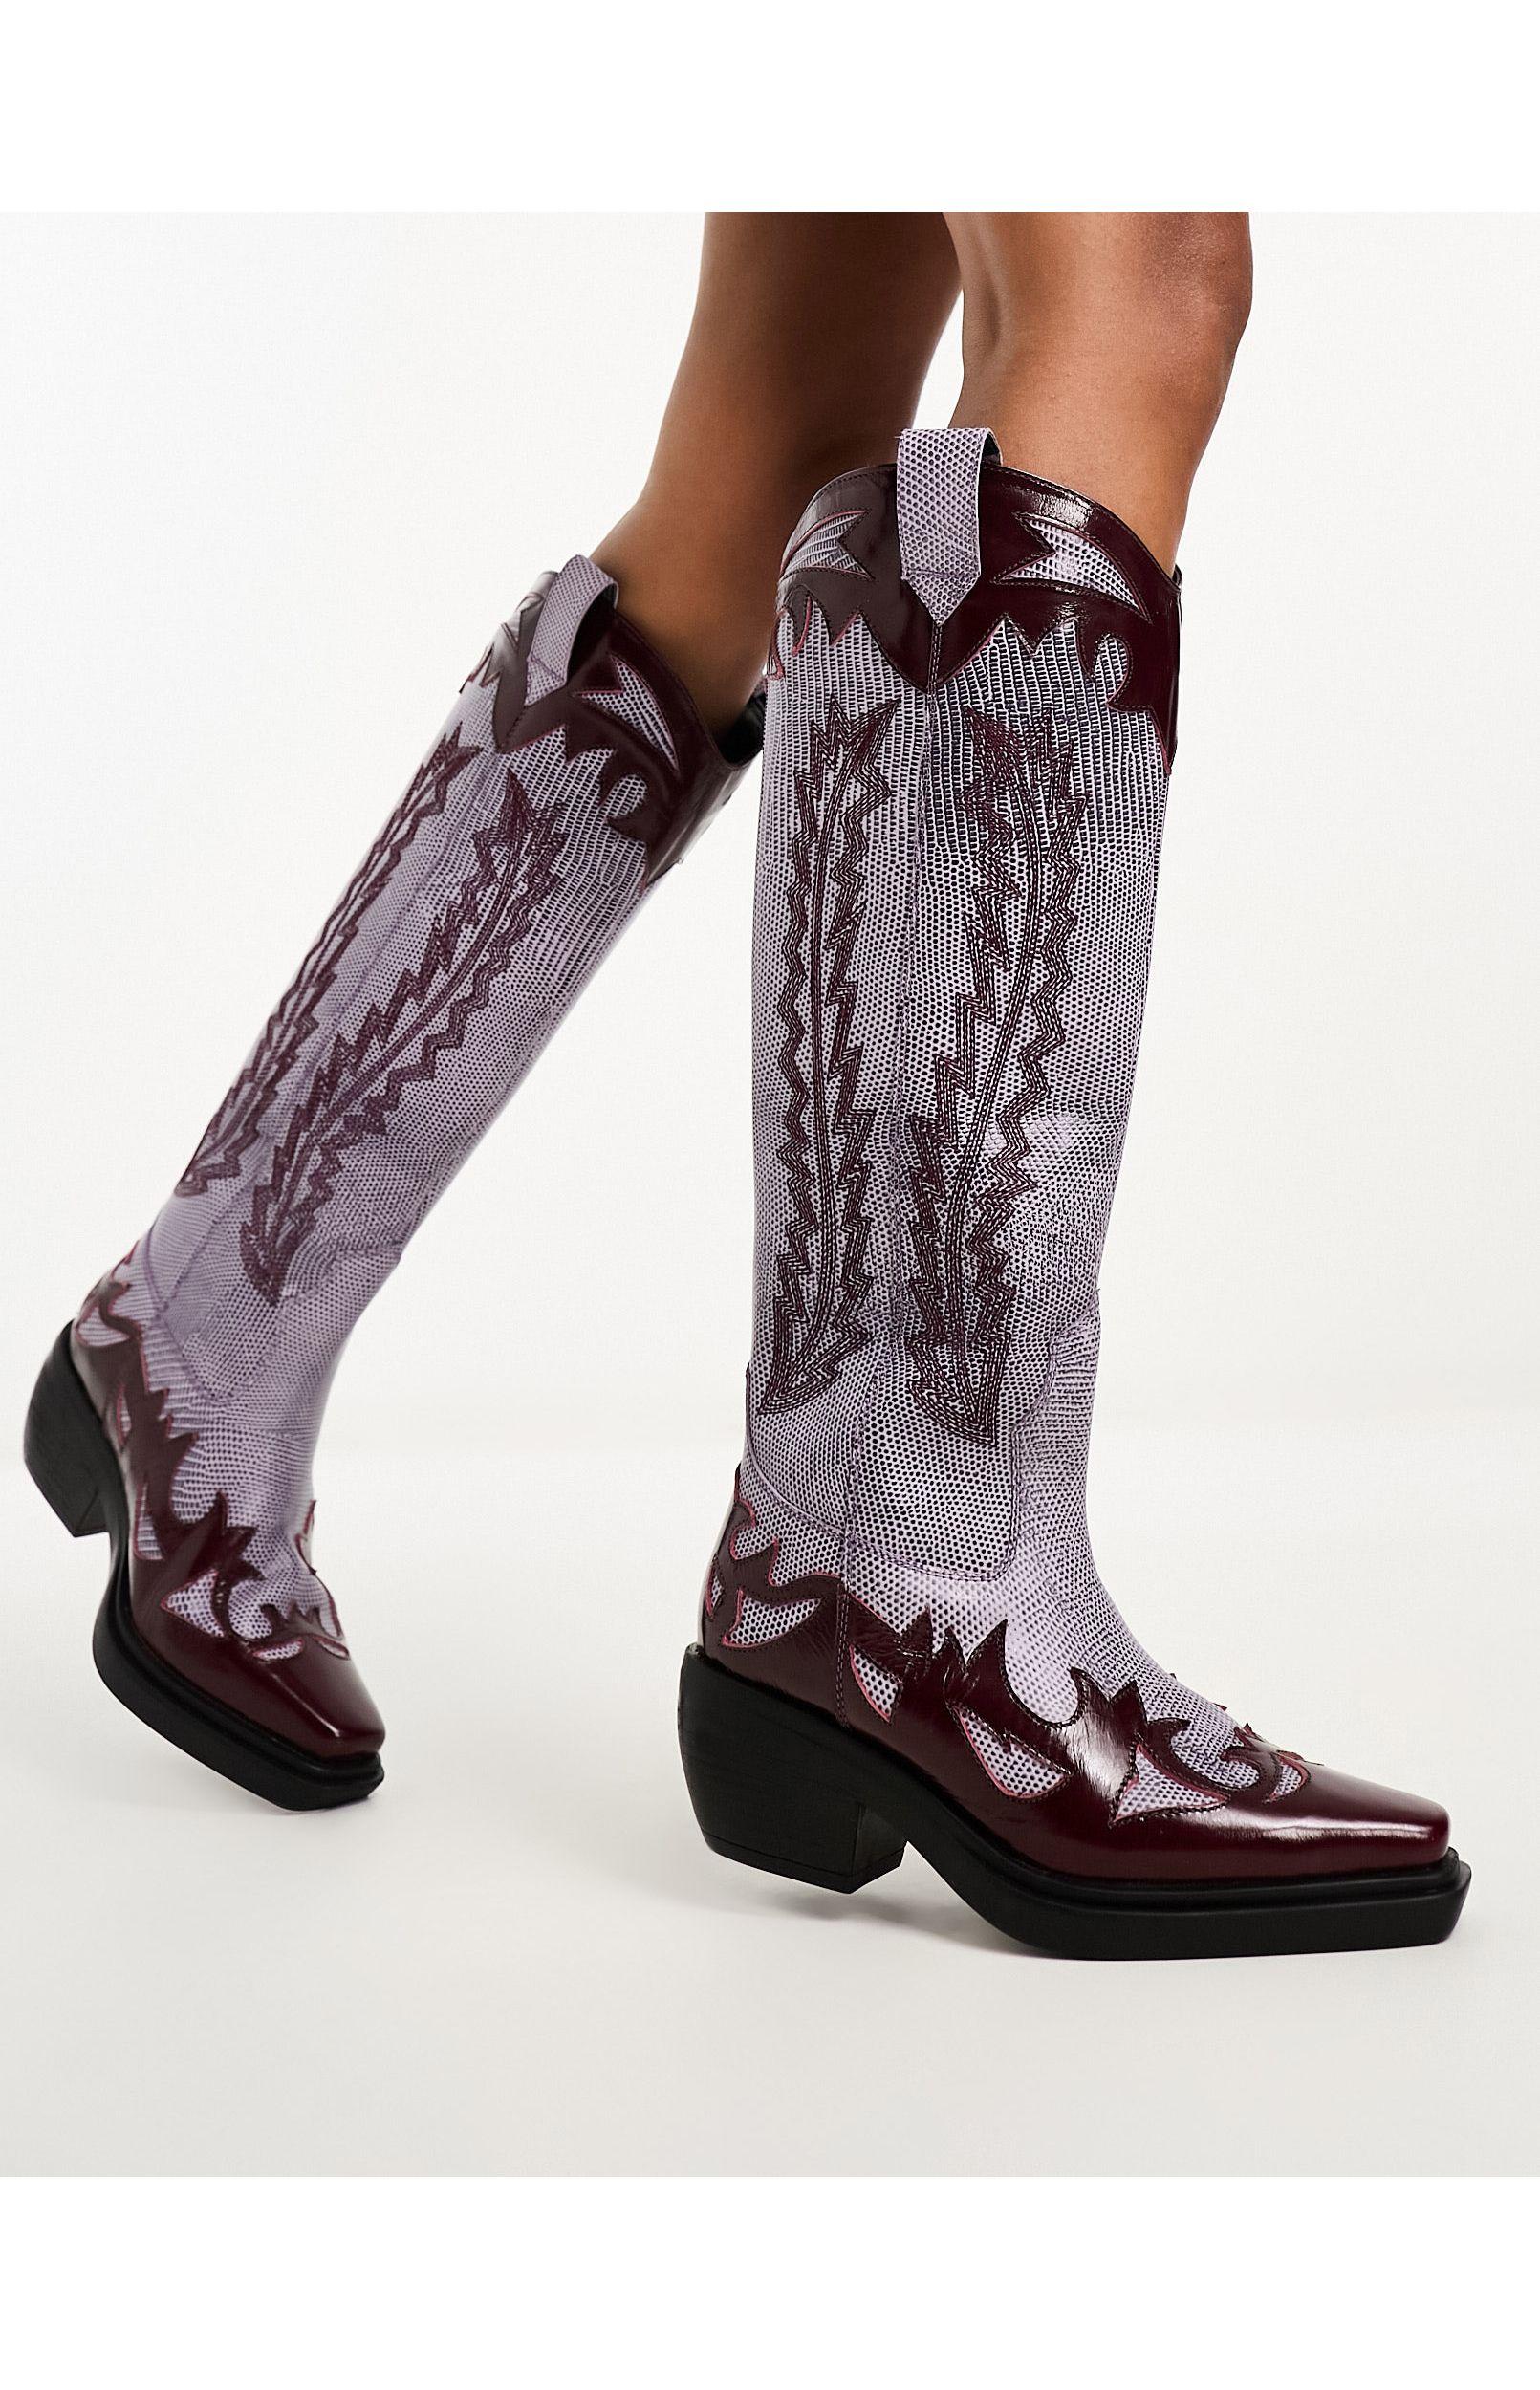 https://cdna.lystit.com/photos/asos/8c0198be/asos-Purple-Cannon-Leather-Western-Knee-Boots.jpeg